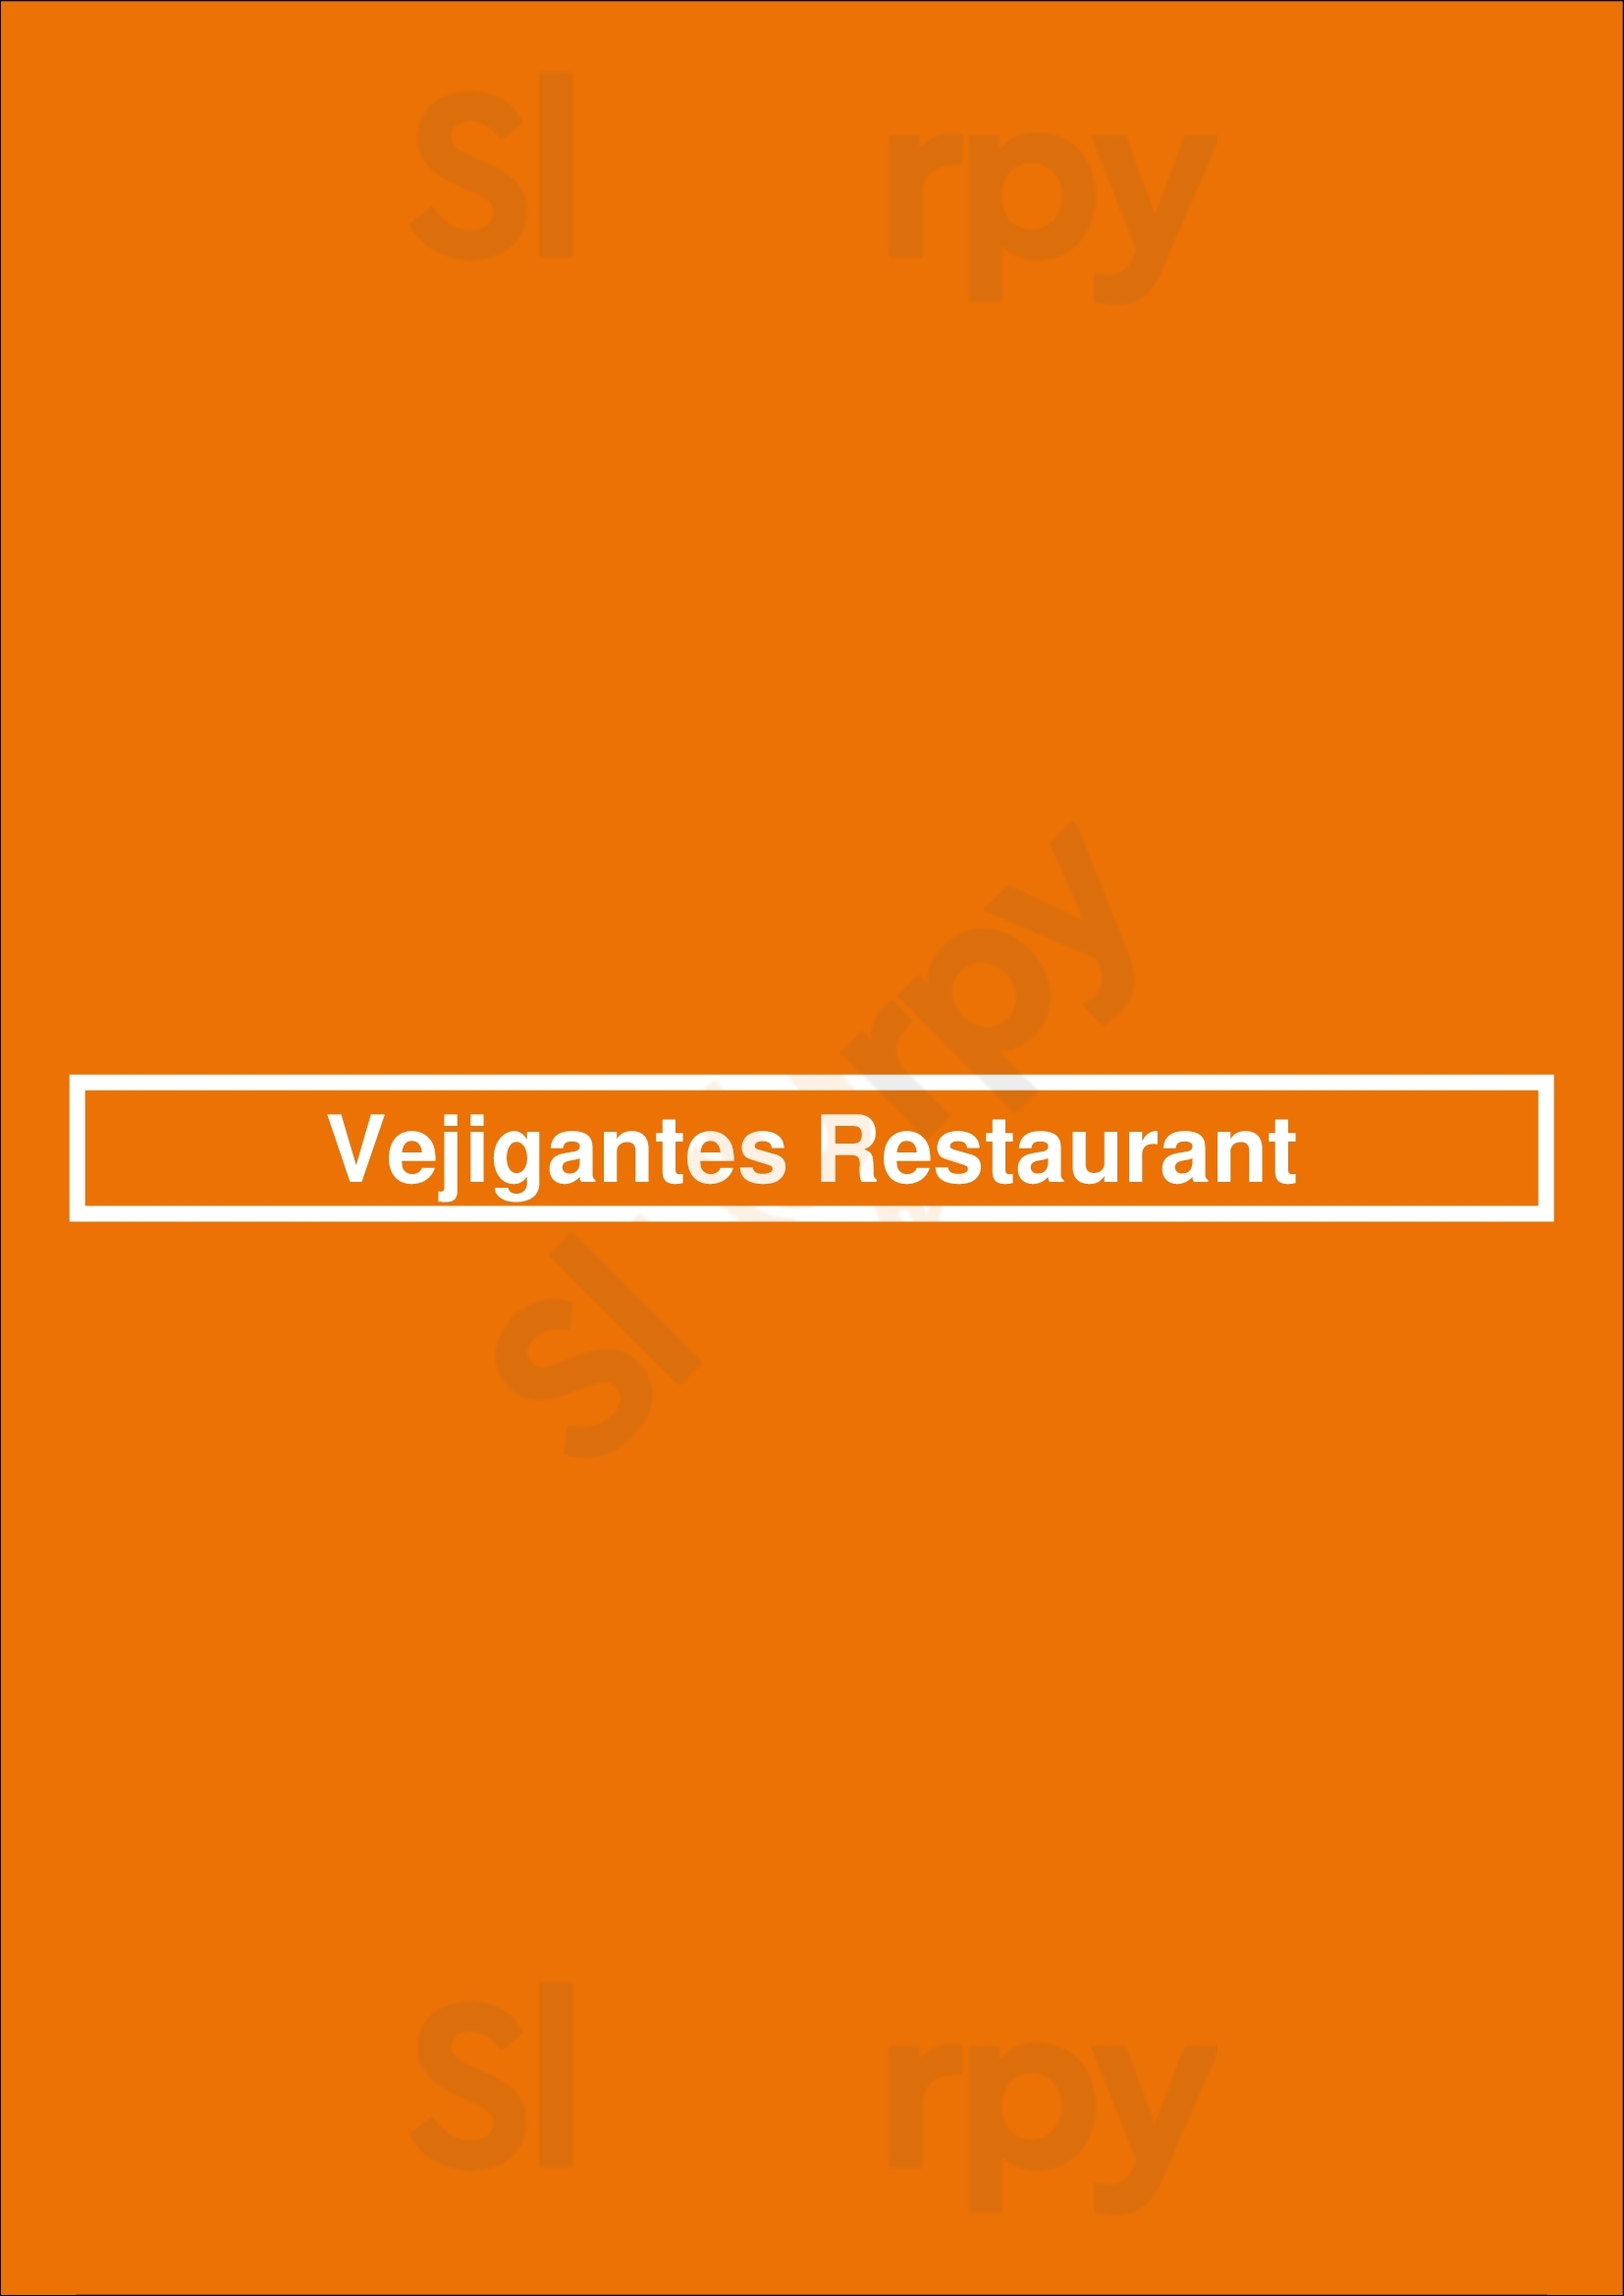 Vejigantes Restaurant Boston Menu - 1